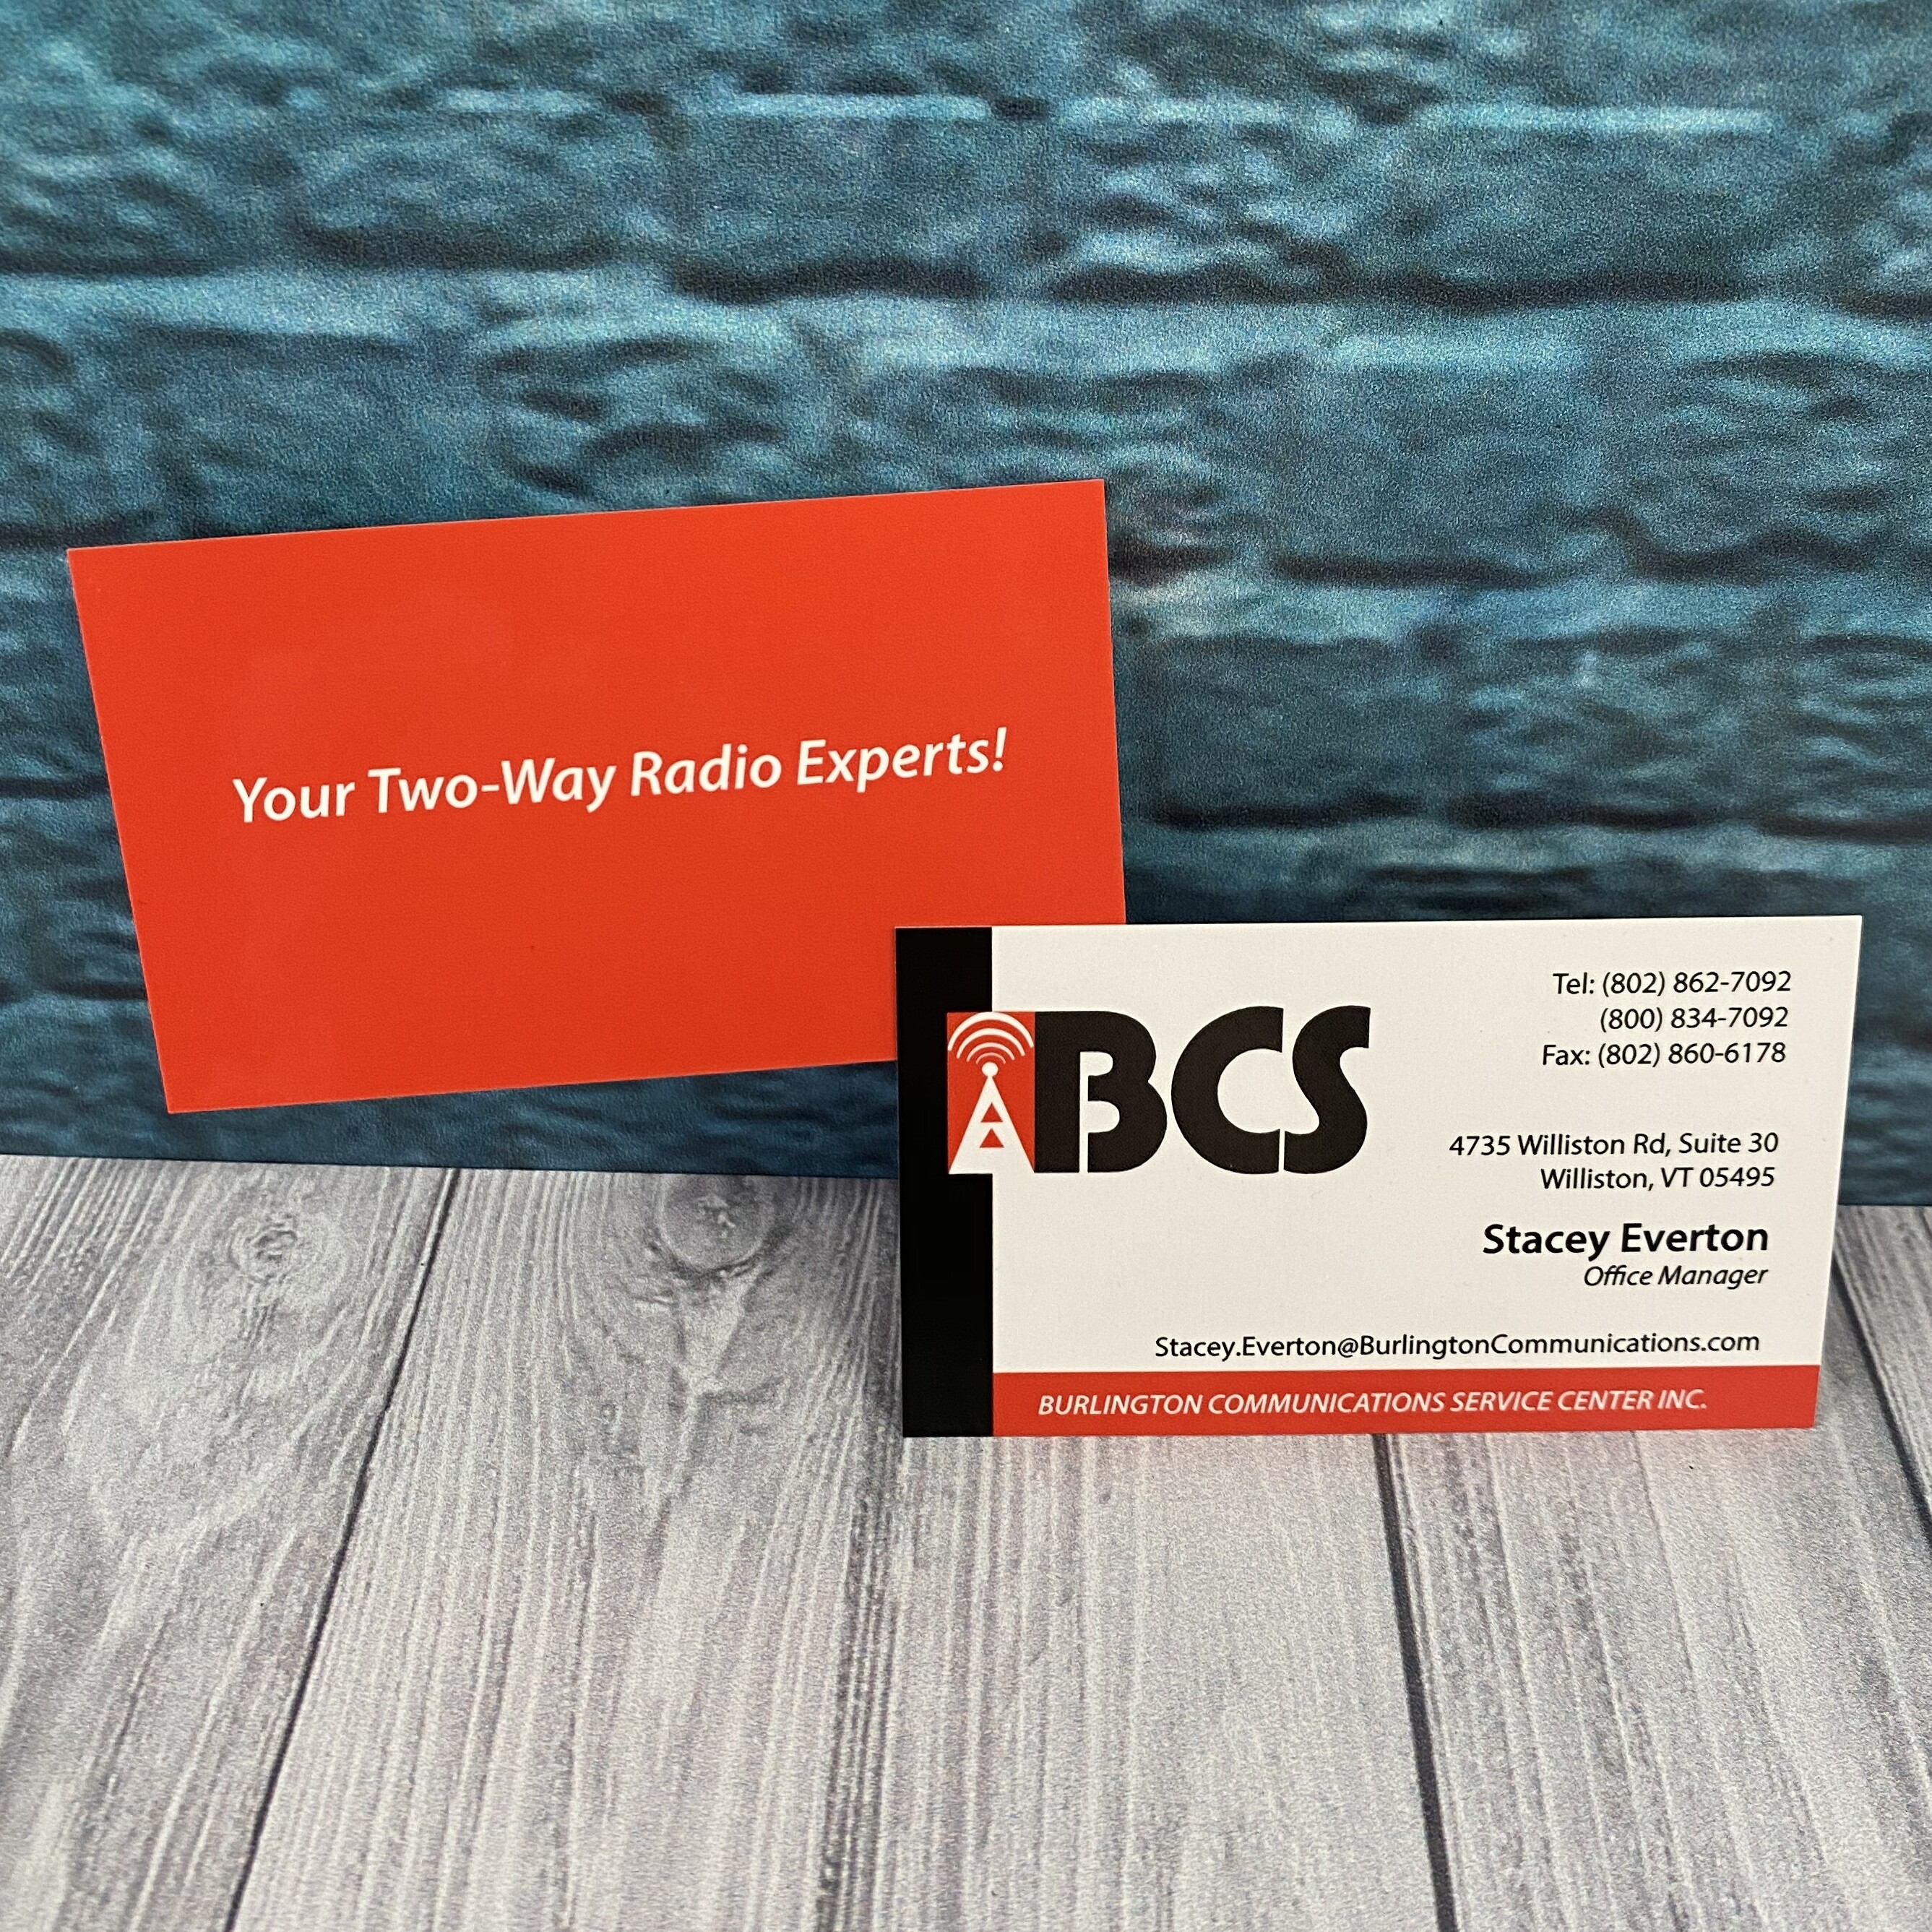 Business card printing for Burlington Communications Service.